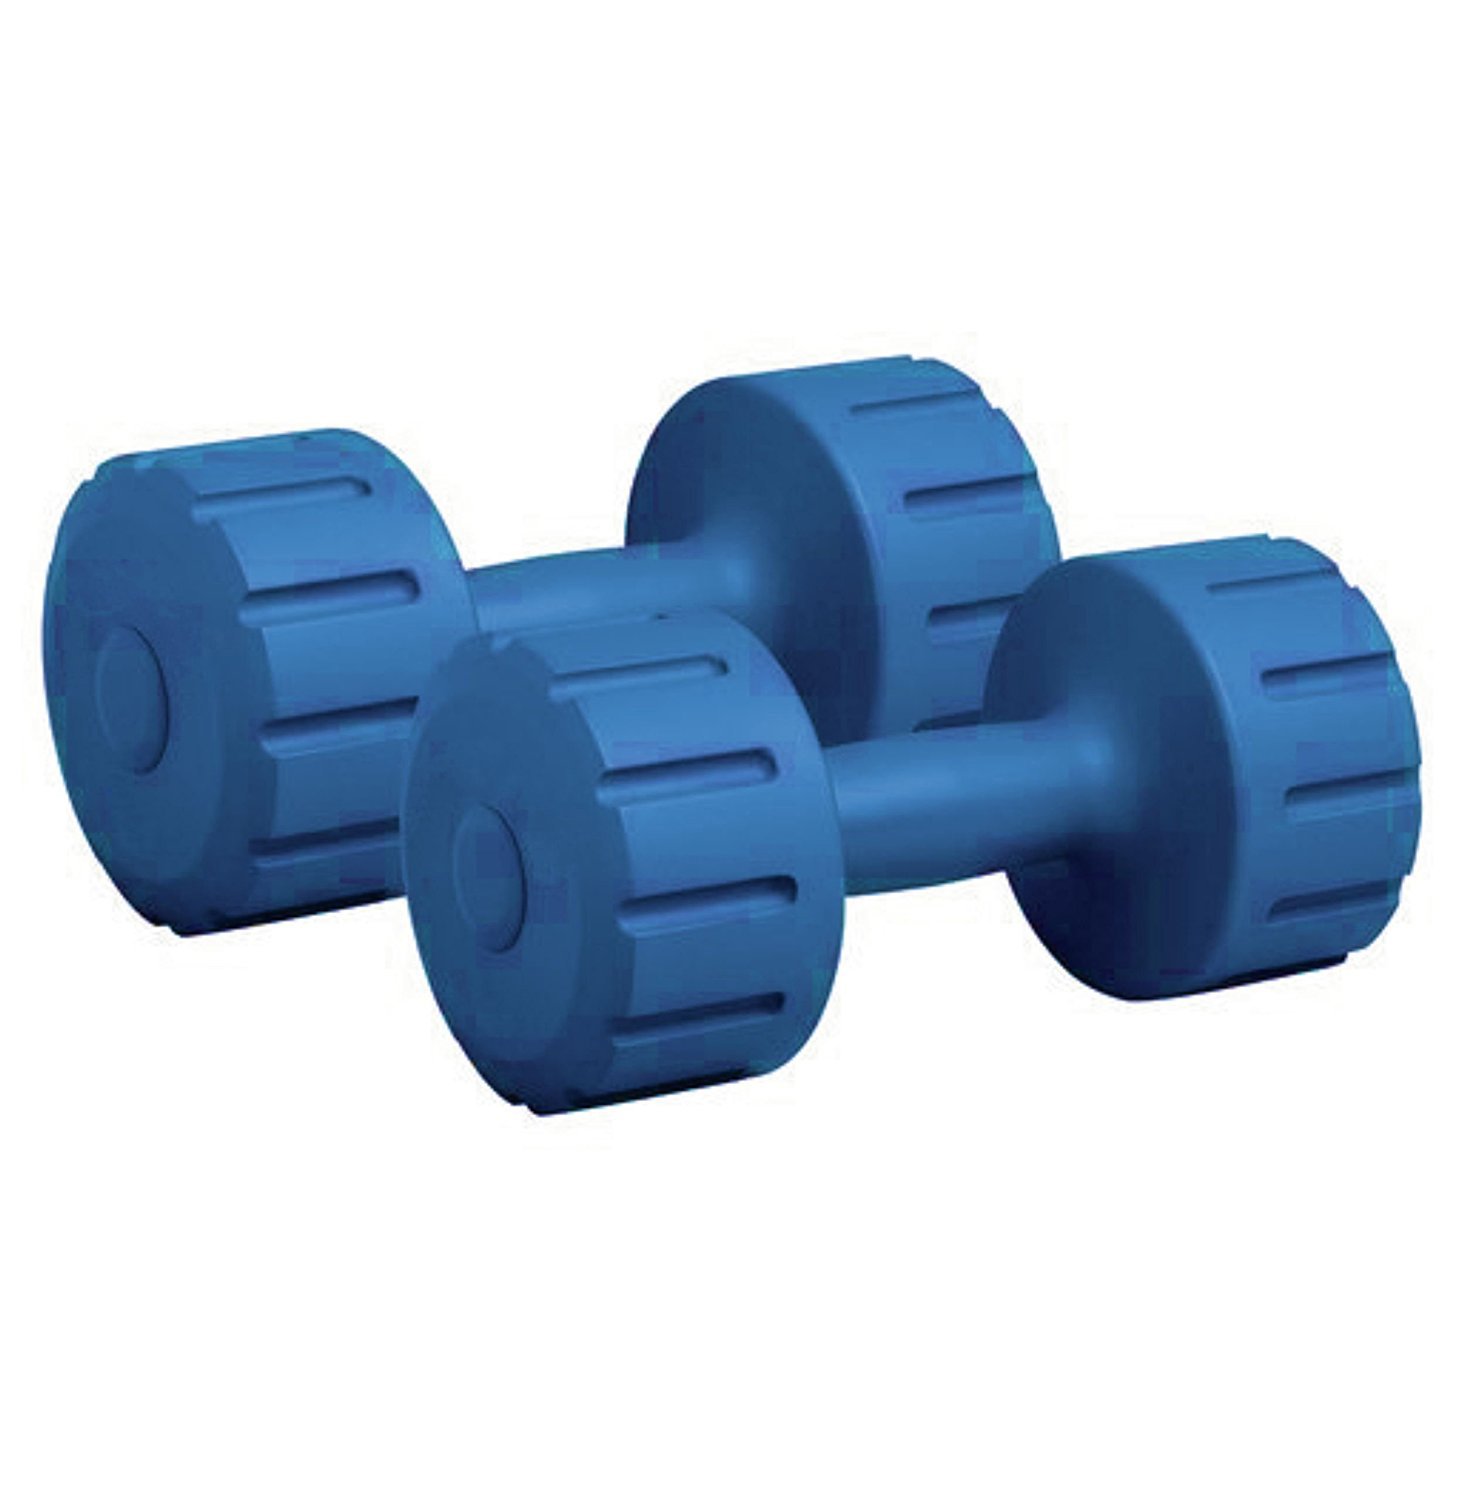 Scorpion Pack of 2 3kgx2  PVC Dumbbells Weights Fitness Home Gym Exercise Barbell Light Heavy for Women Mens Dumbbell